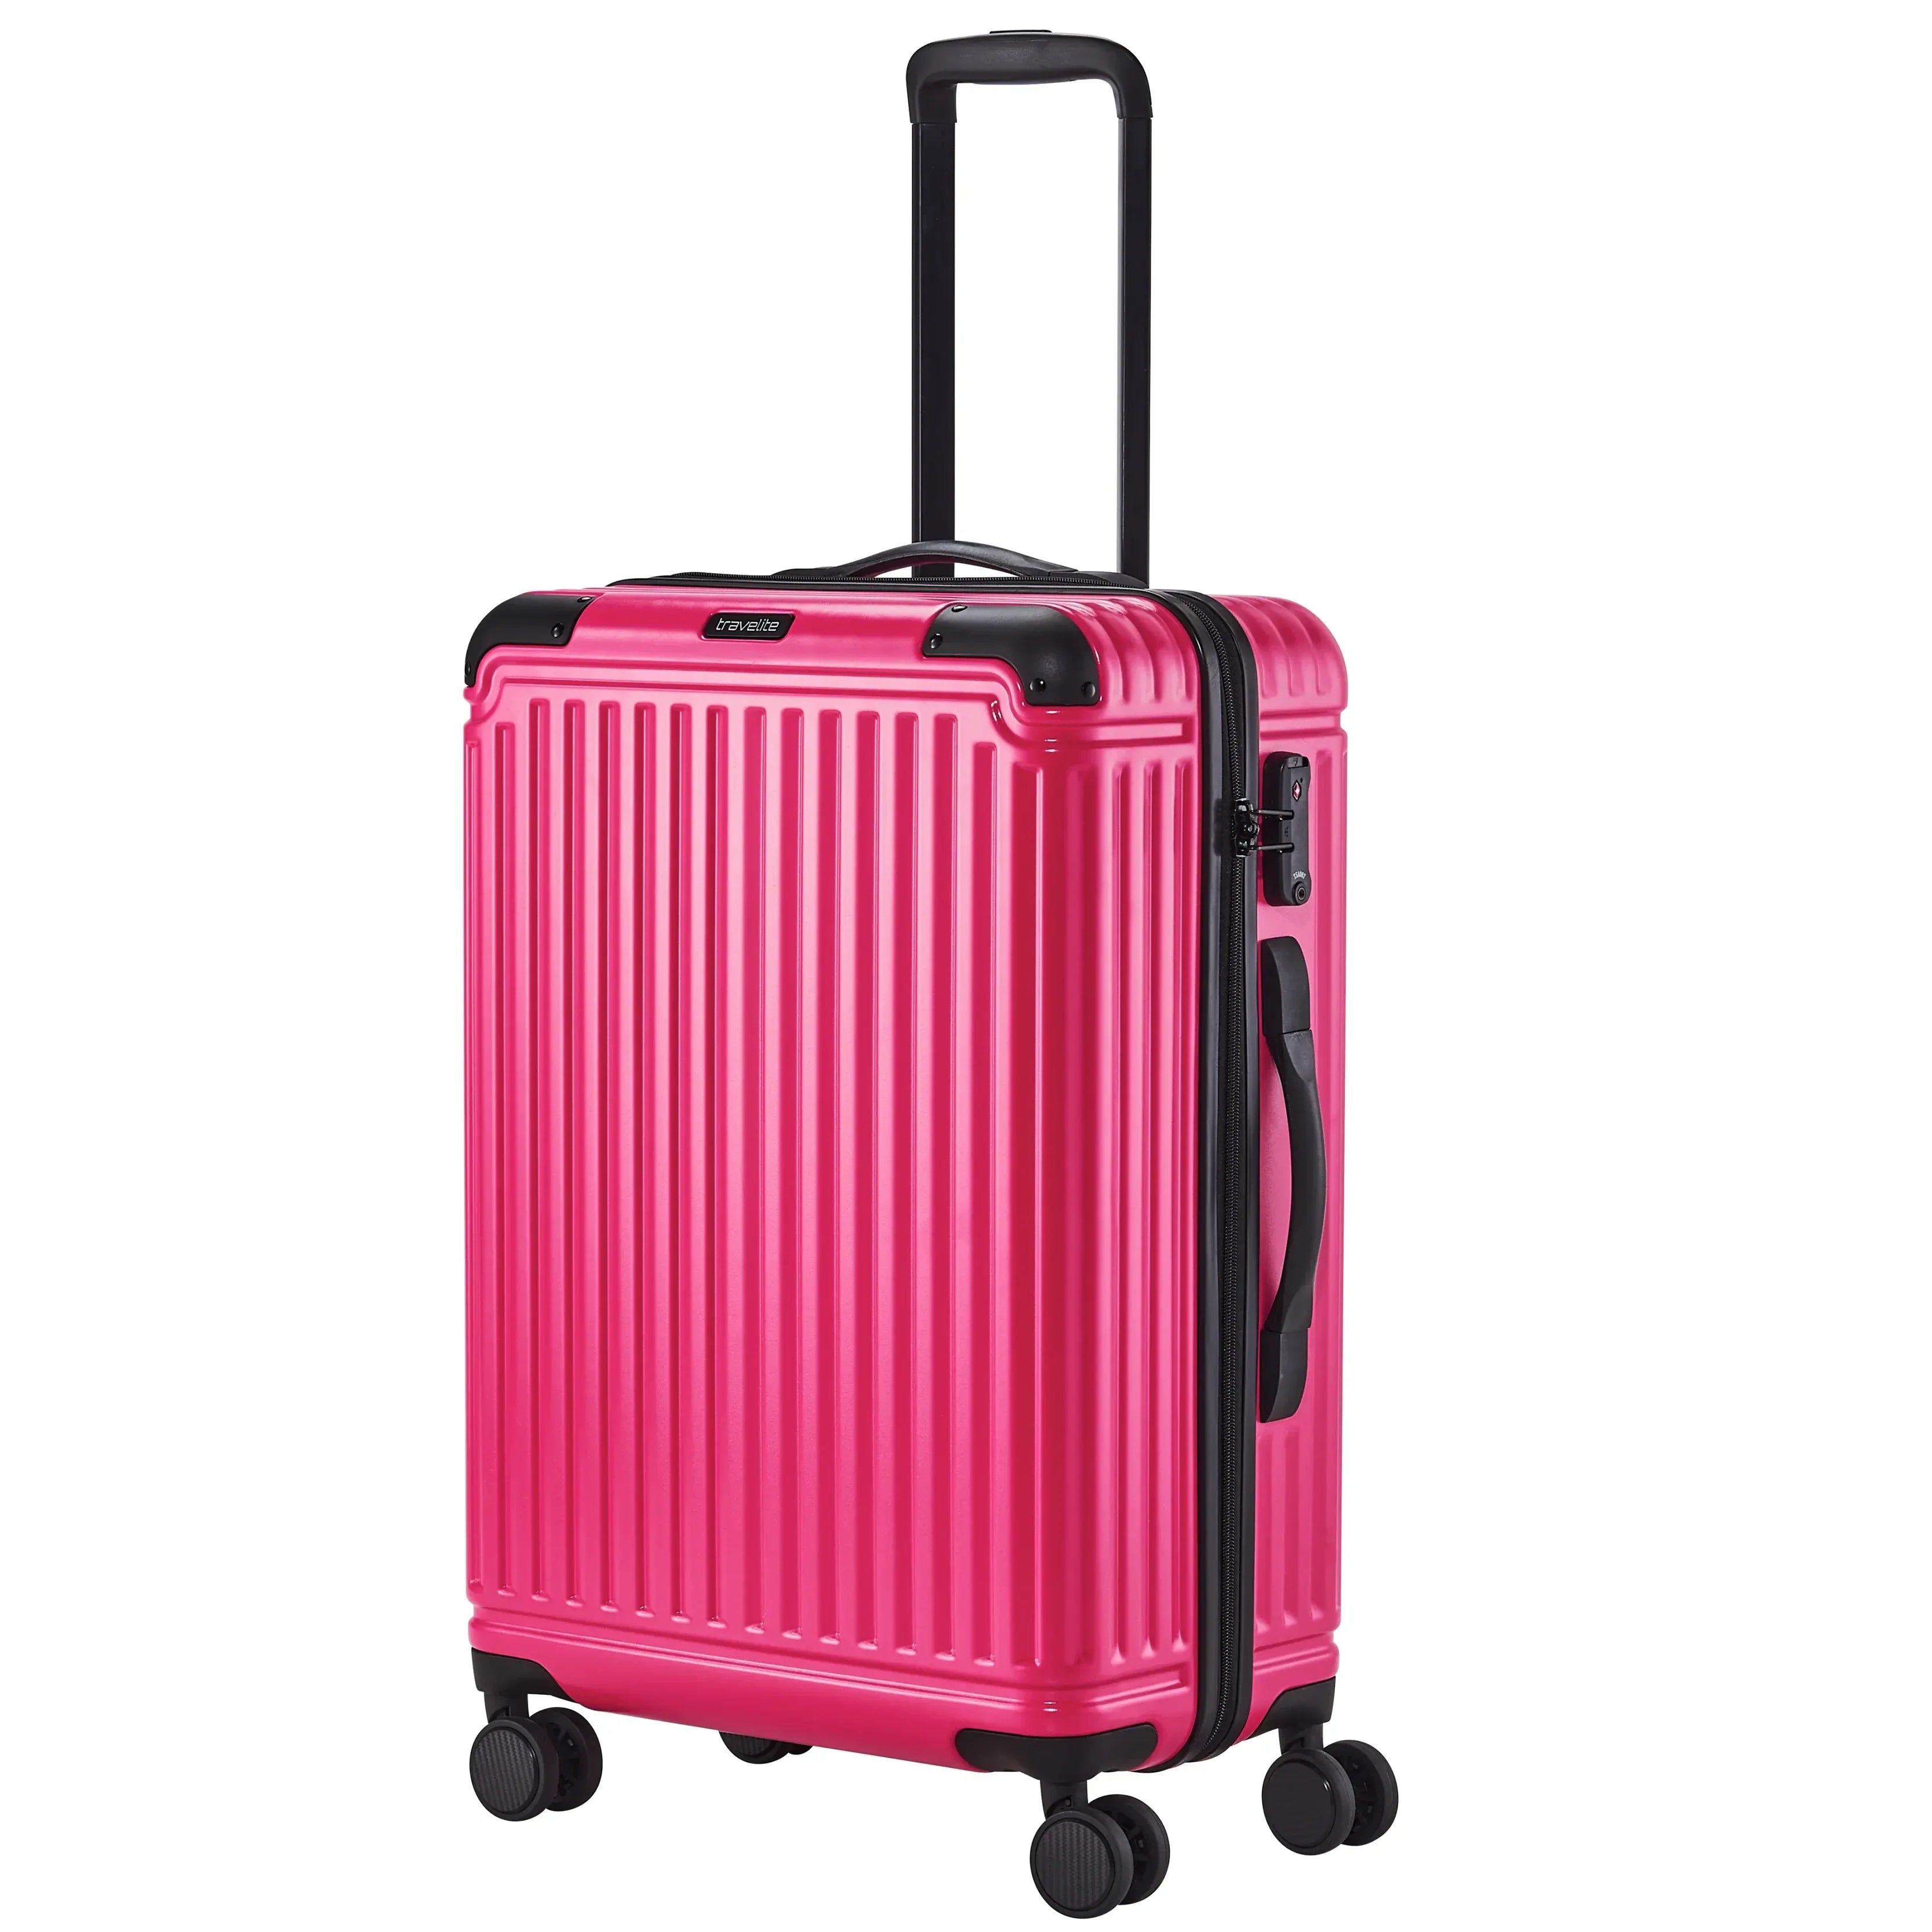 Travelite Cruise 4-wheel trolley 67 cm - Pink